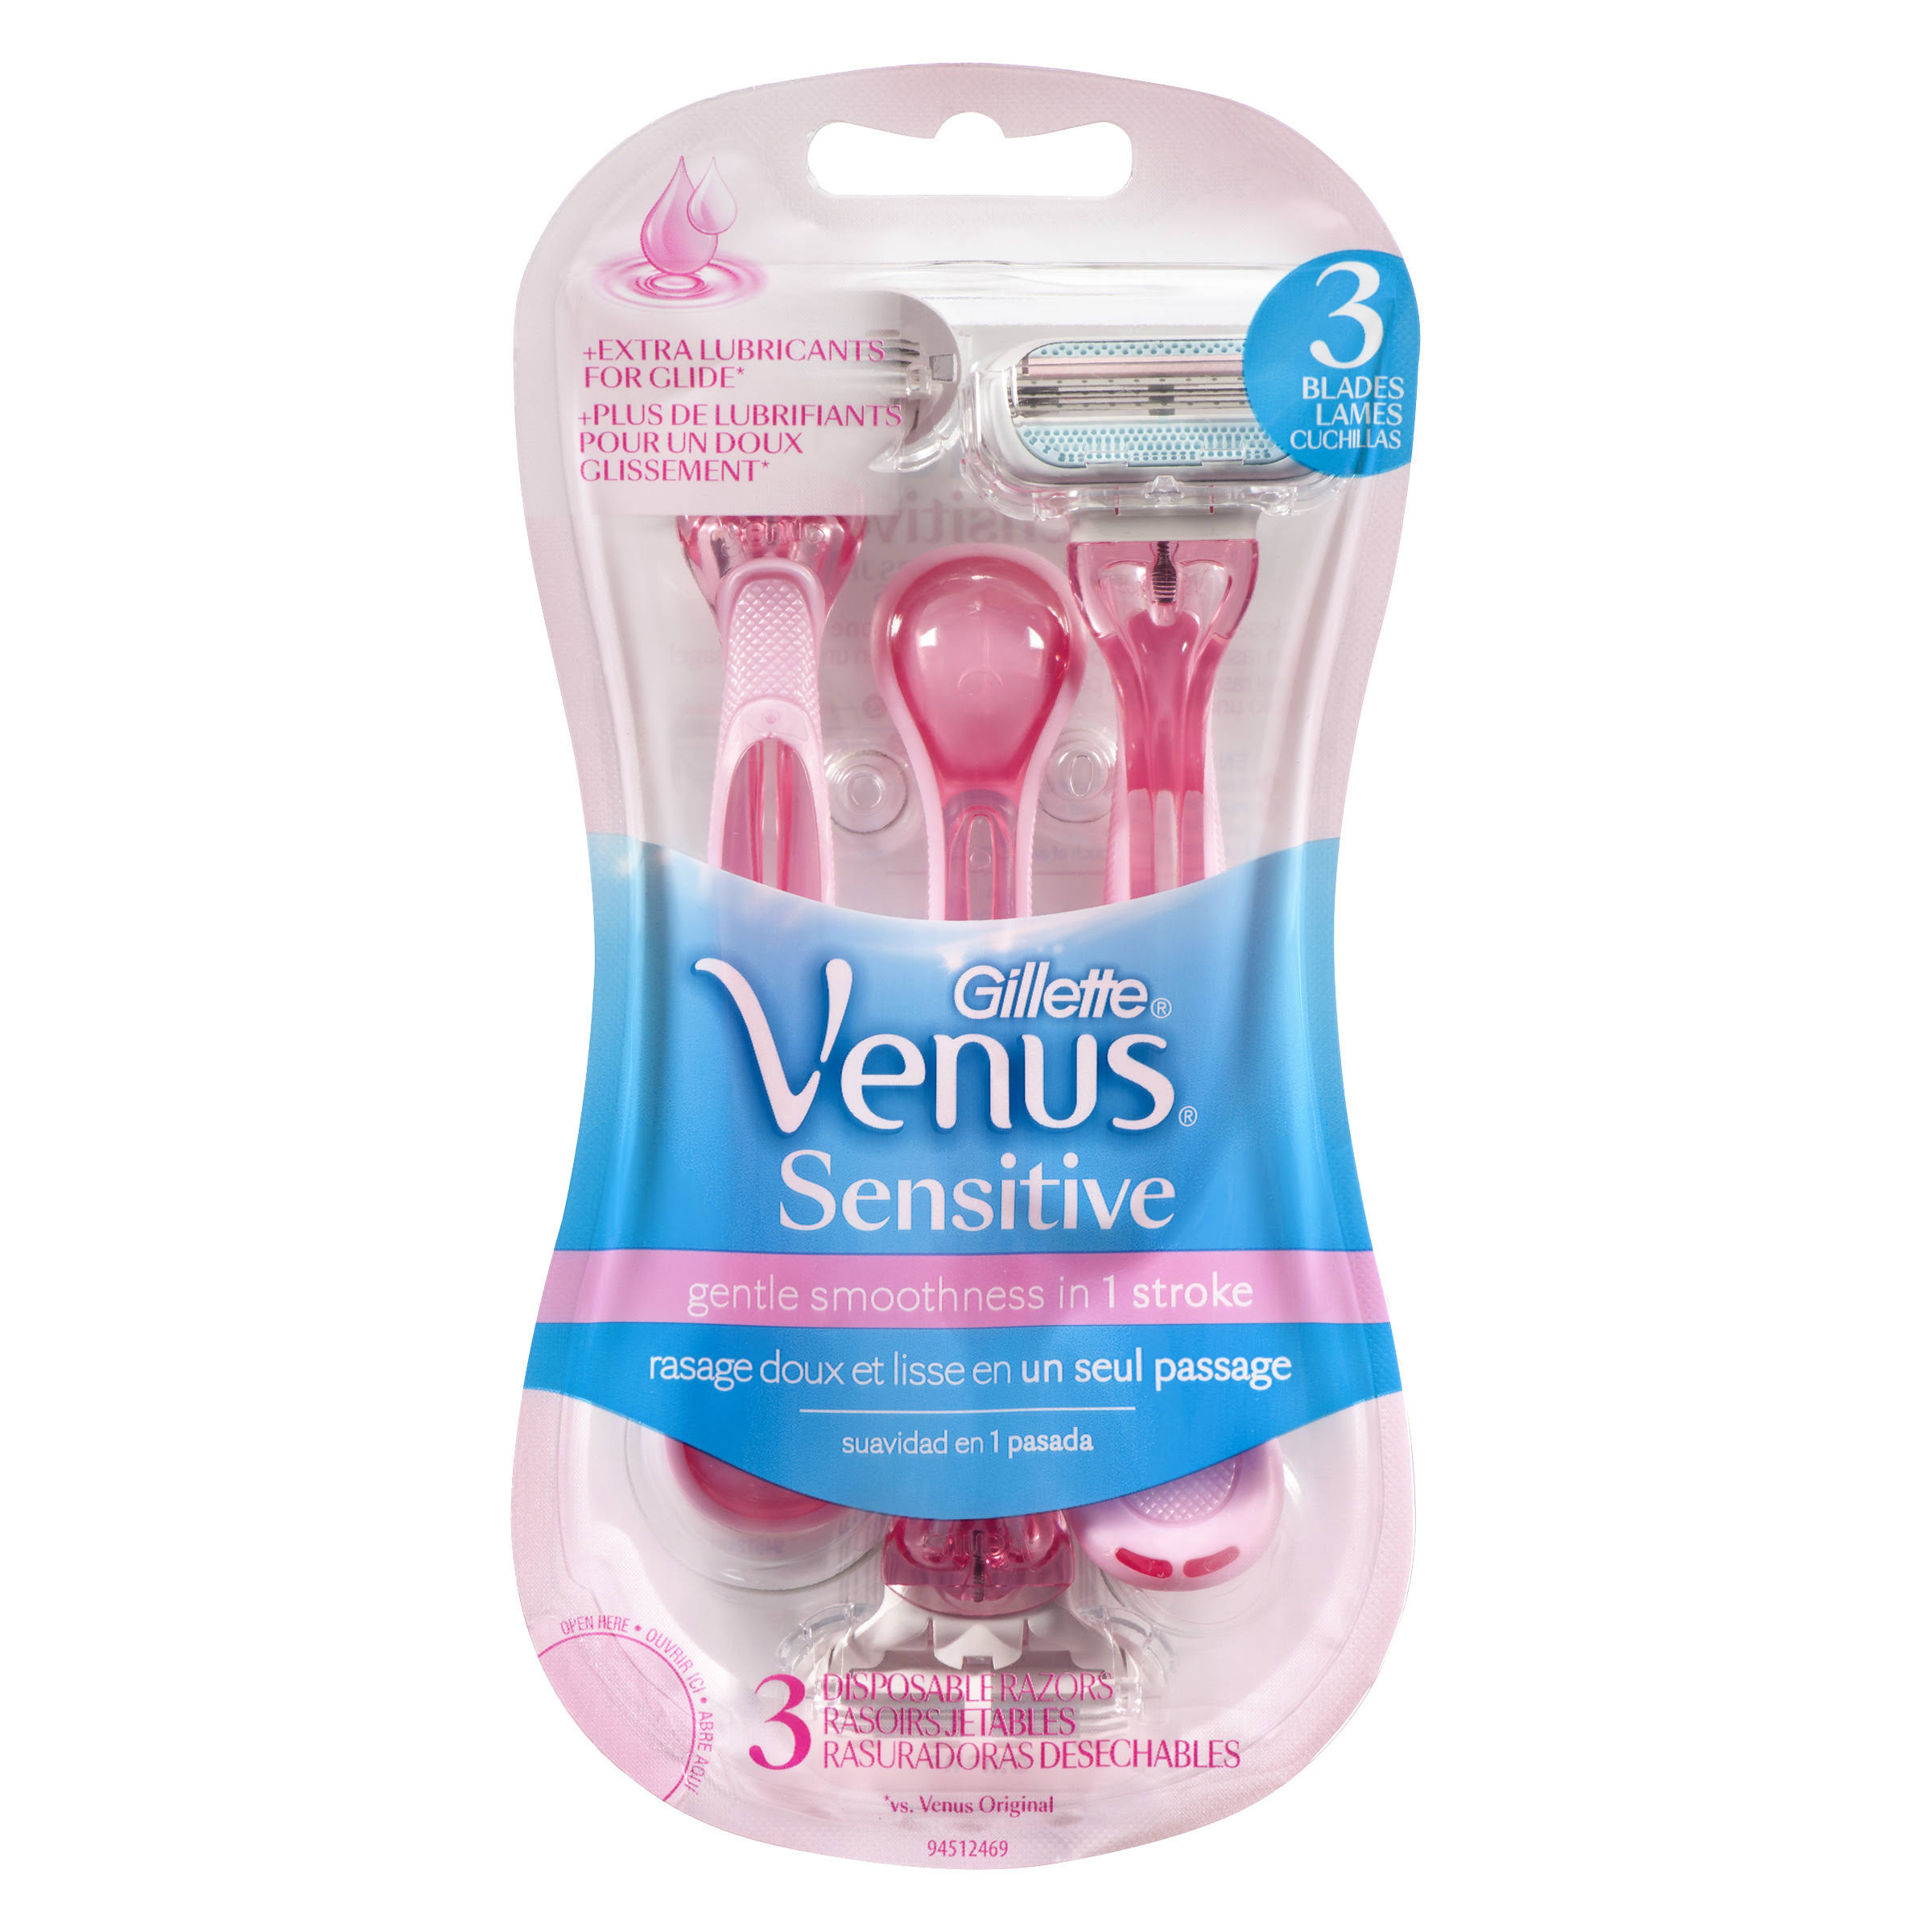 Gillette Venus Sensitive Disposable Razors - 3pk